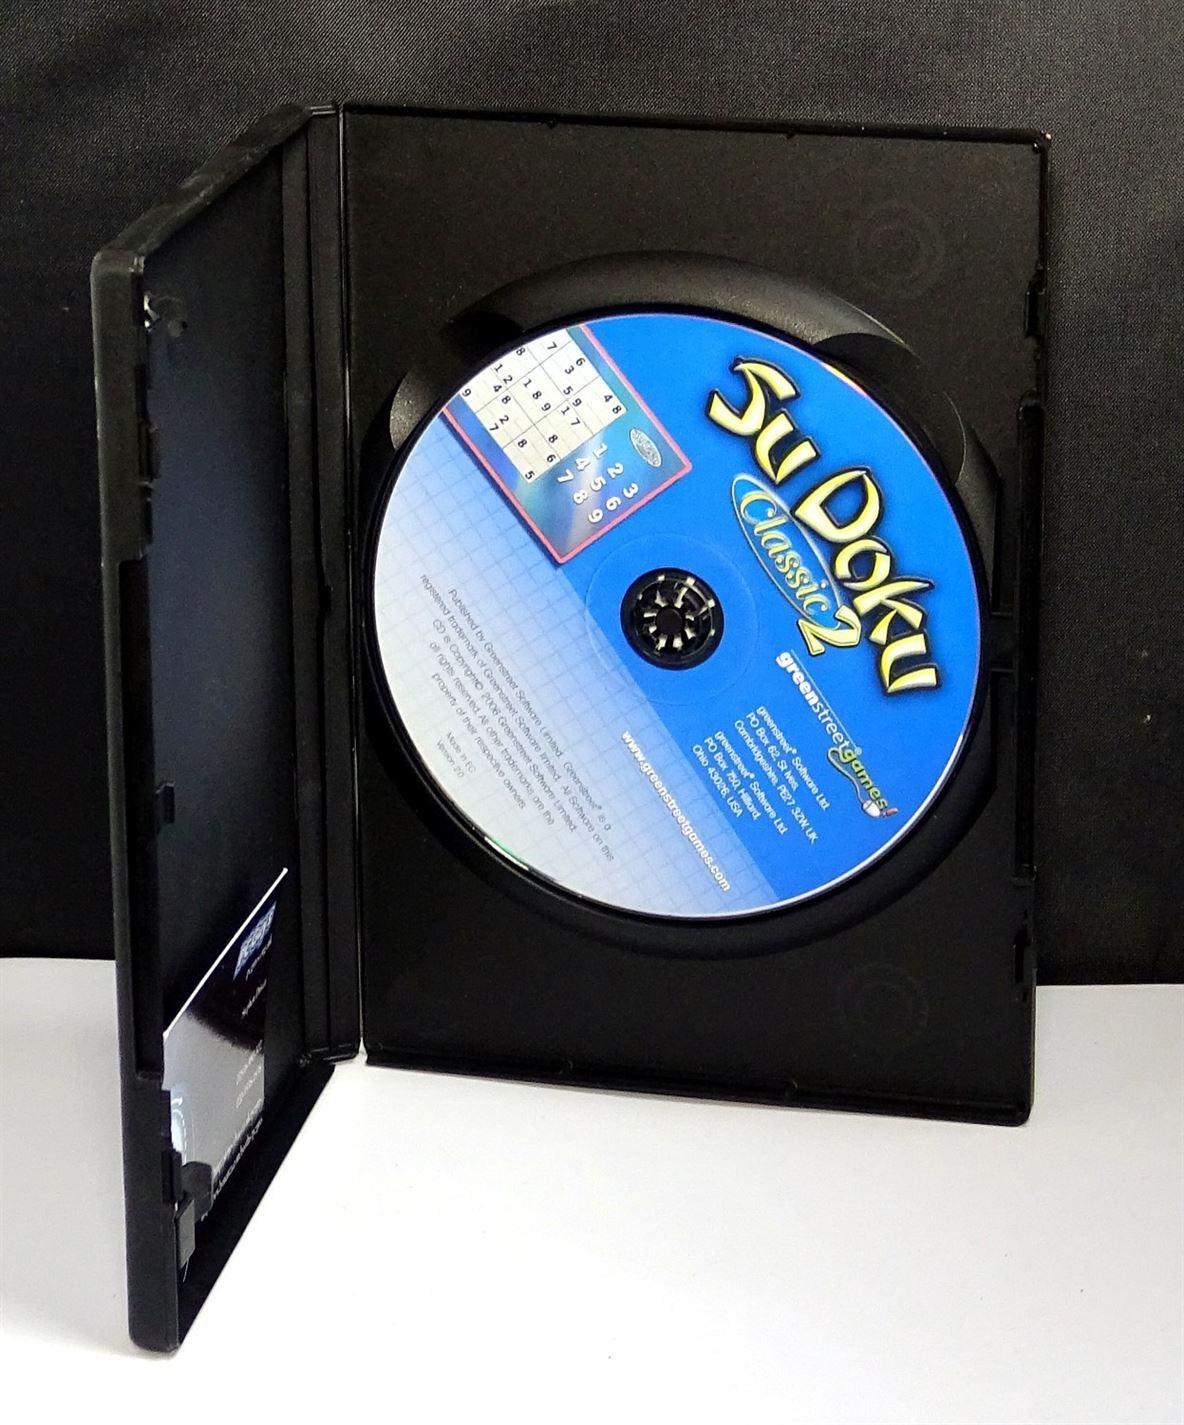 Su Doku Classic 2 (PC) - UK Seller